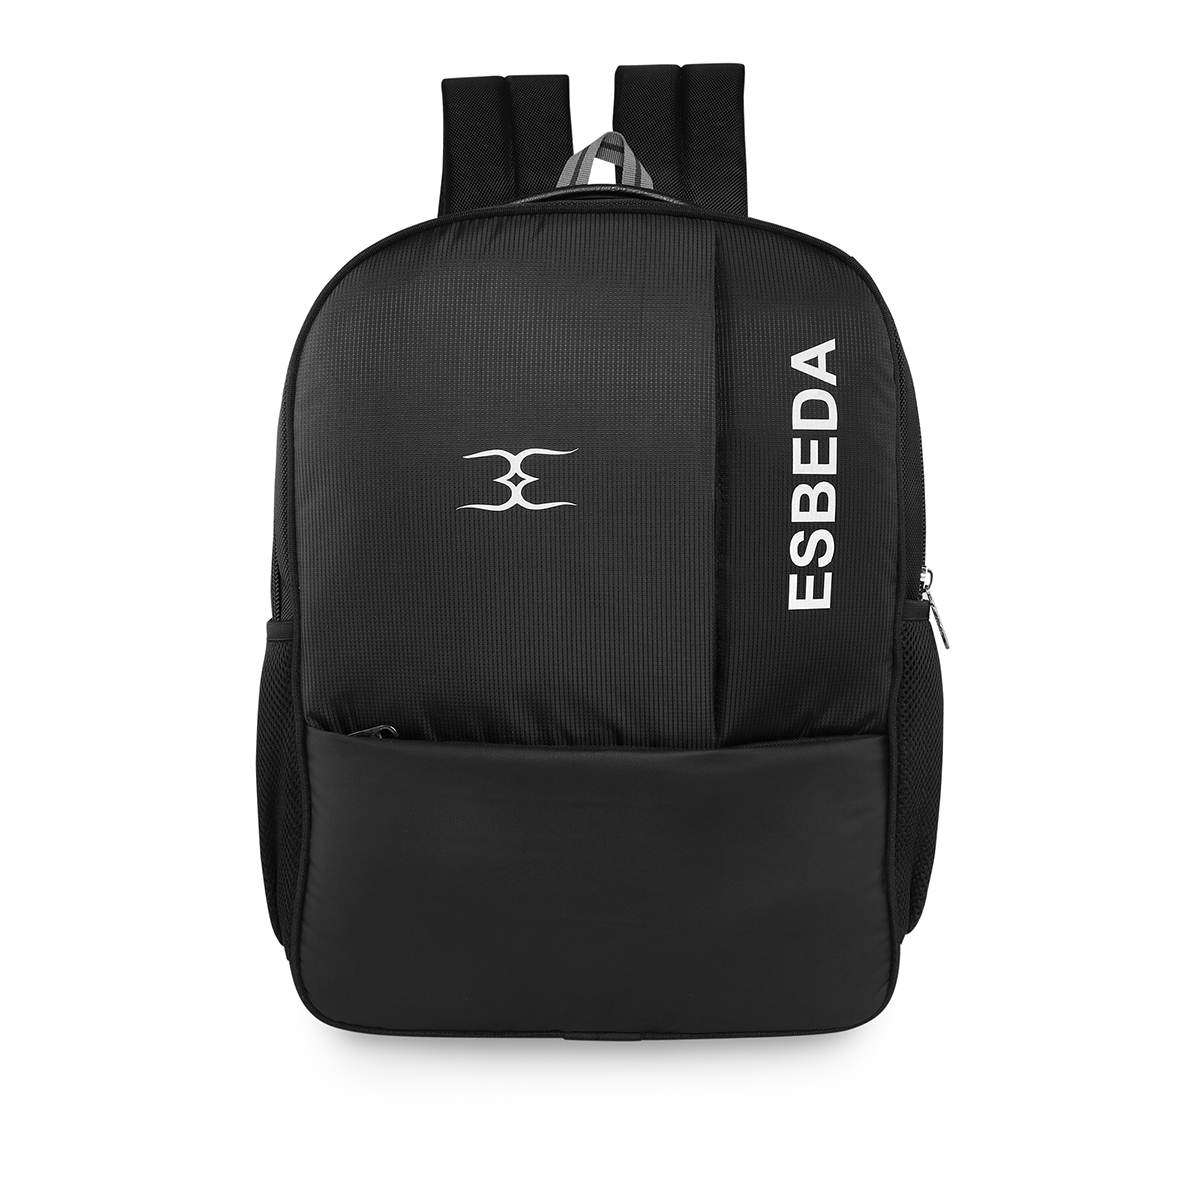 ESBEDA | ESBEDA Black Color Lightweight Backpack For Men Women Boys Girls/Office, School College Teens & Students.